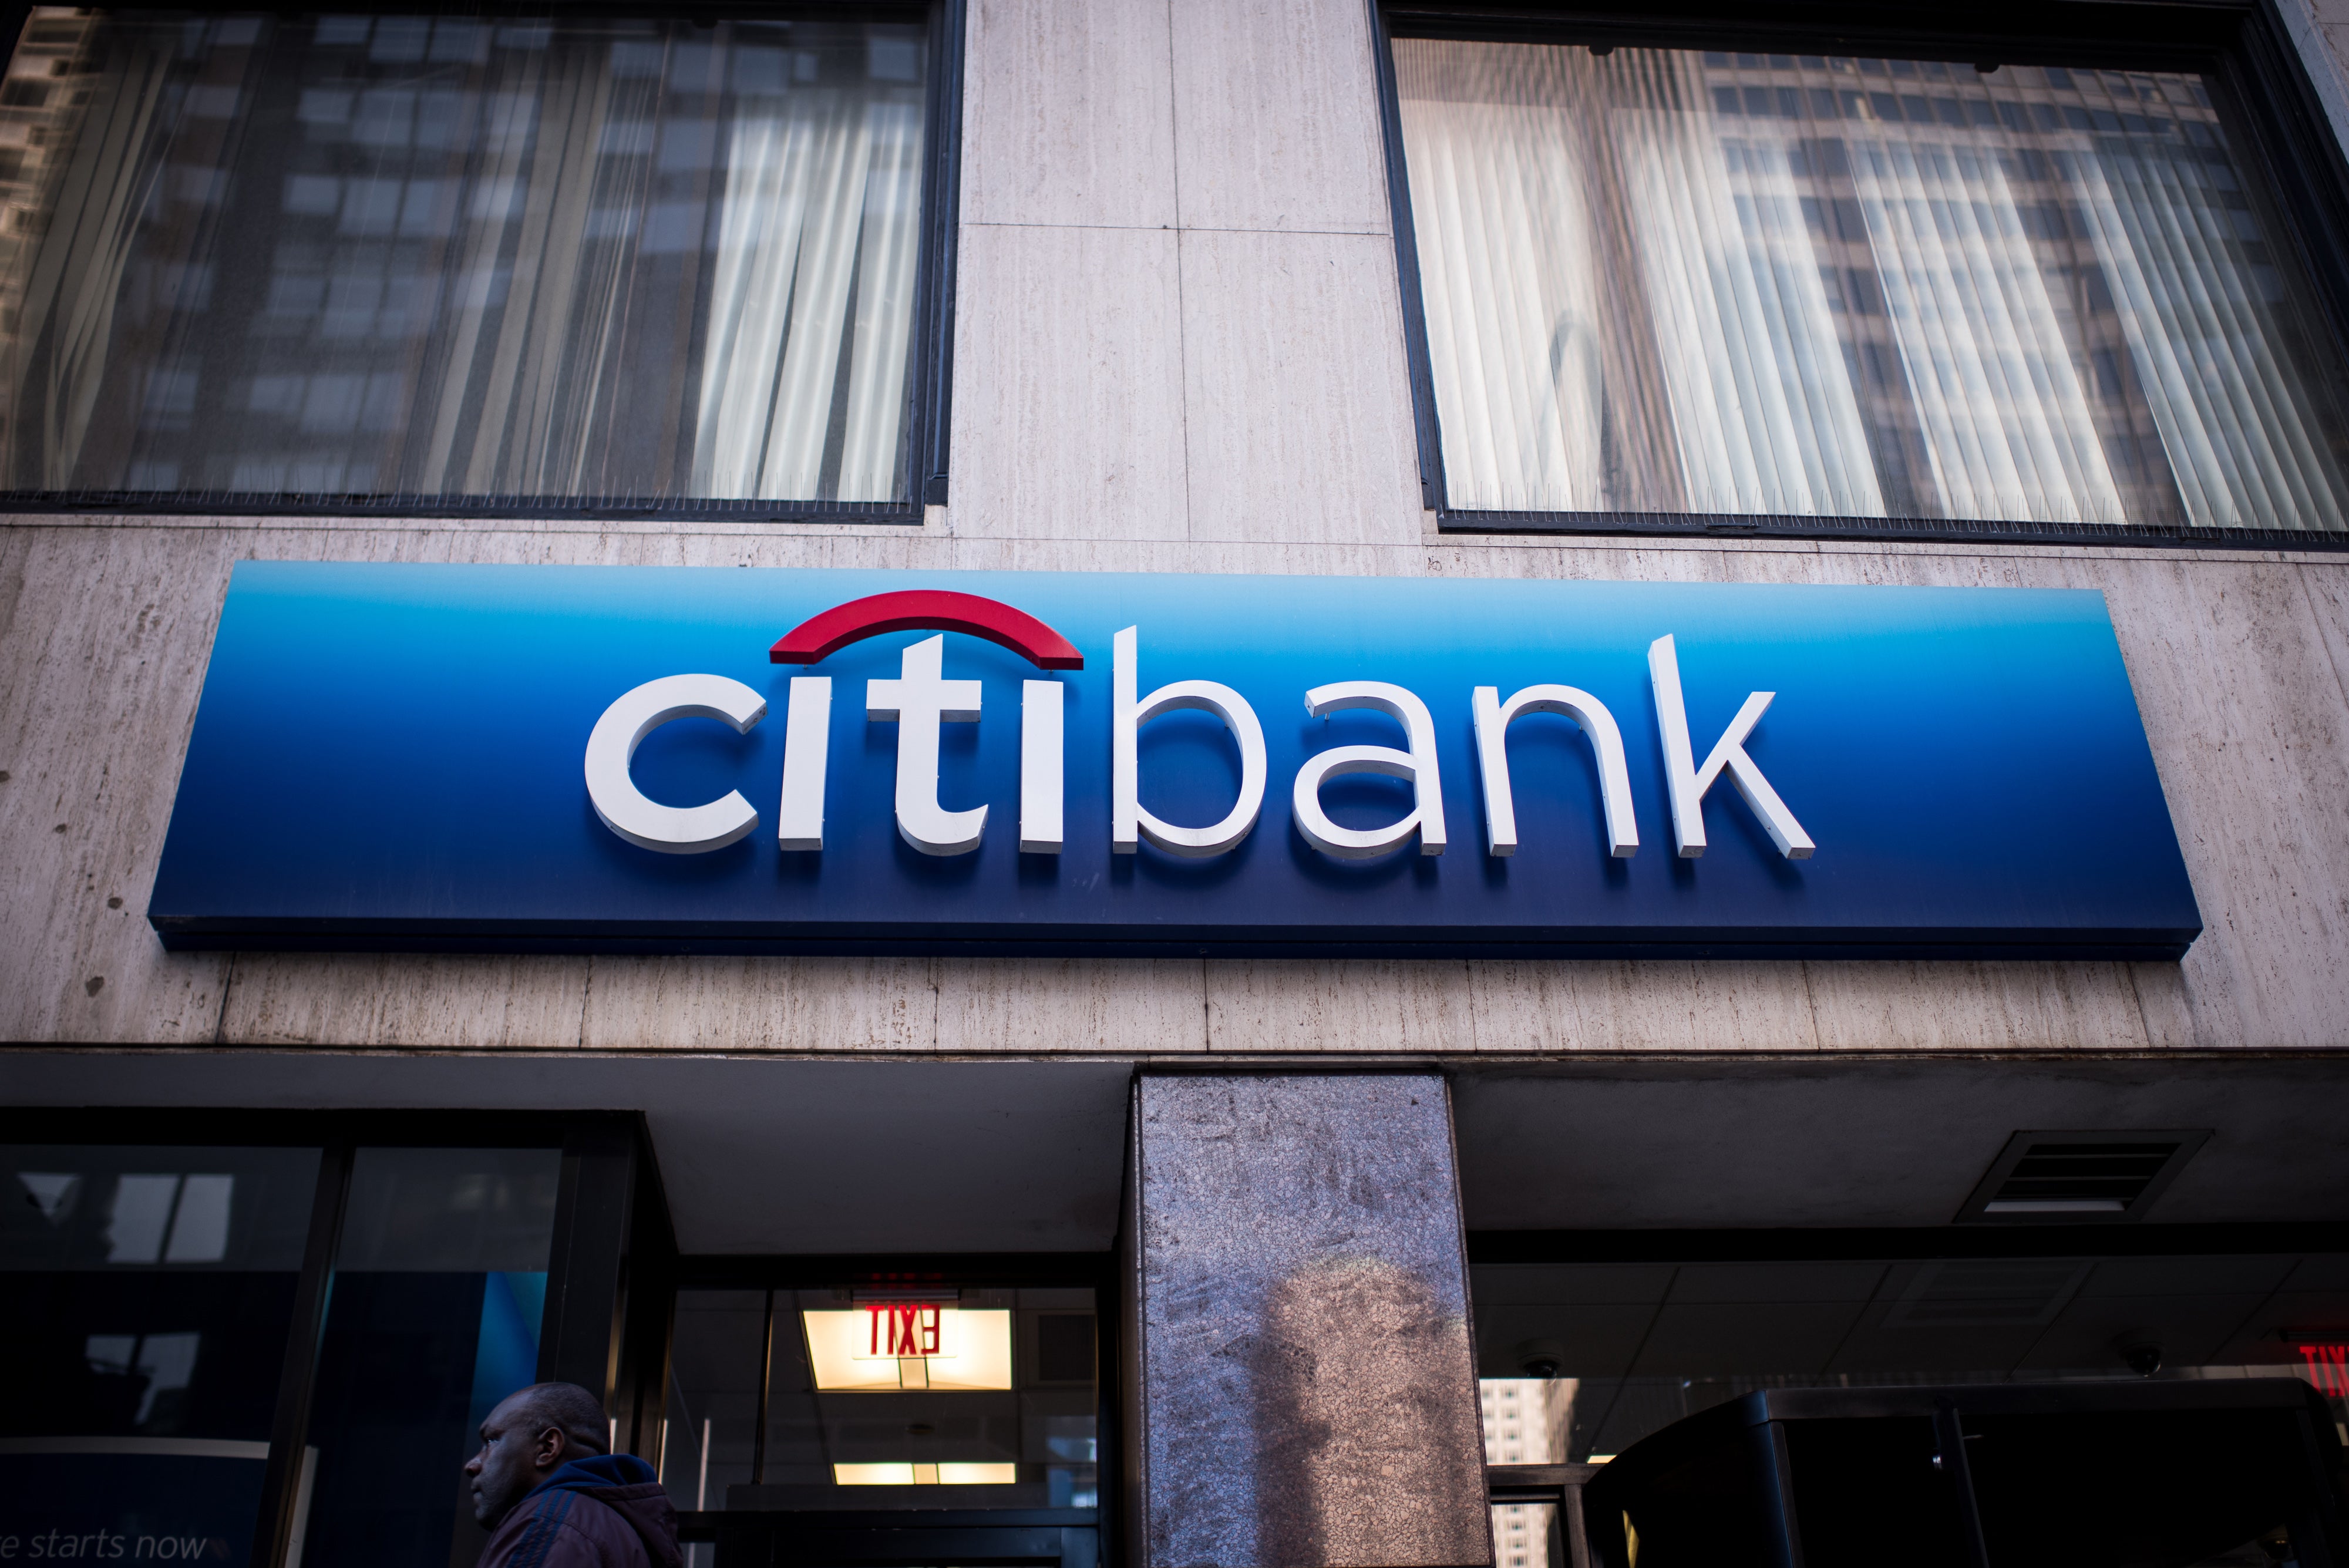 A man walks past a Citibank sign over an entrance